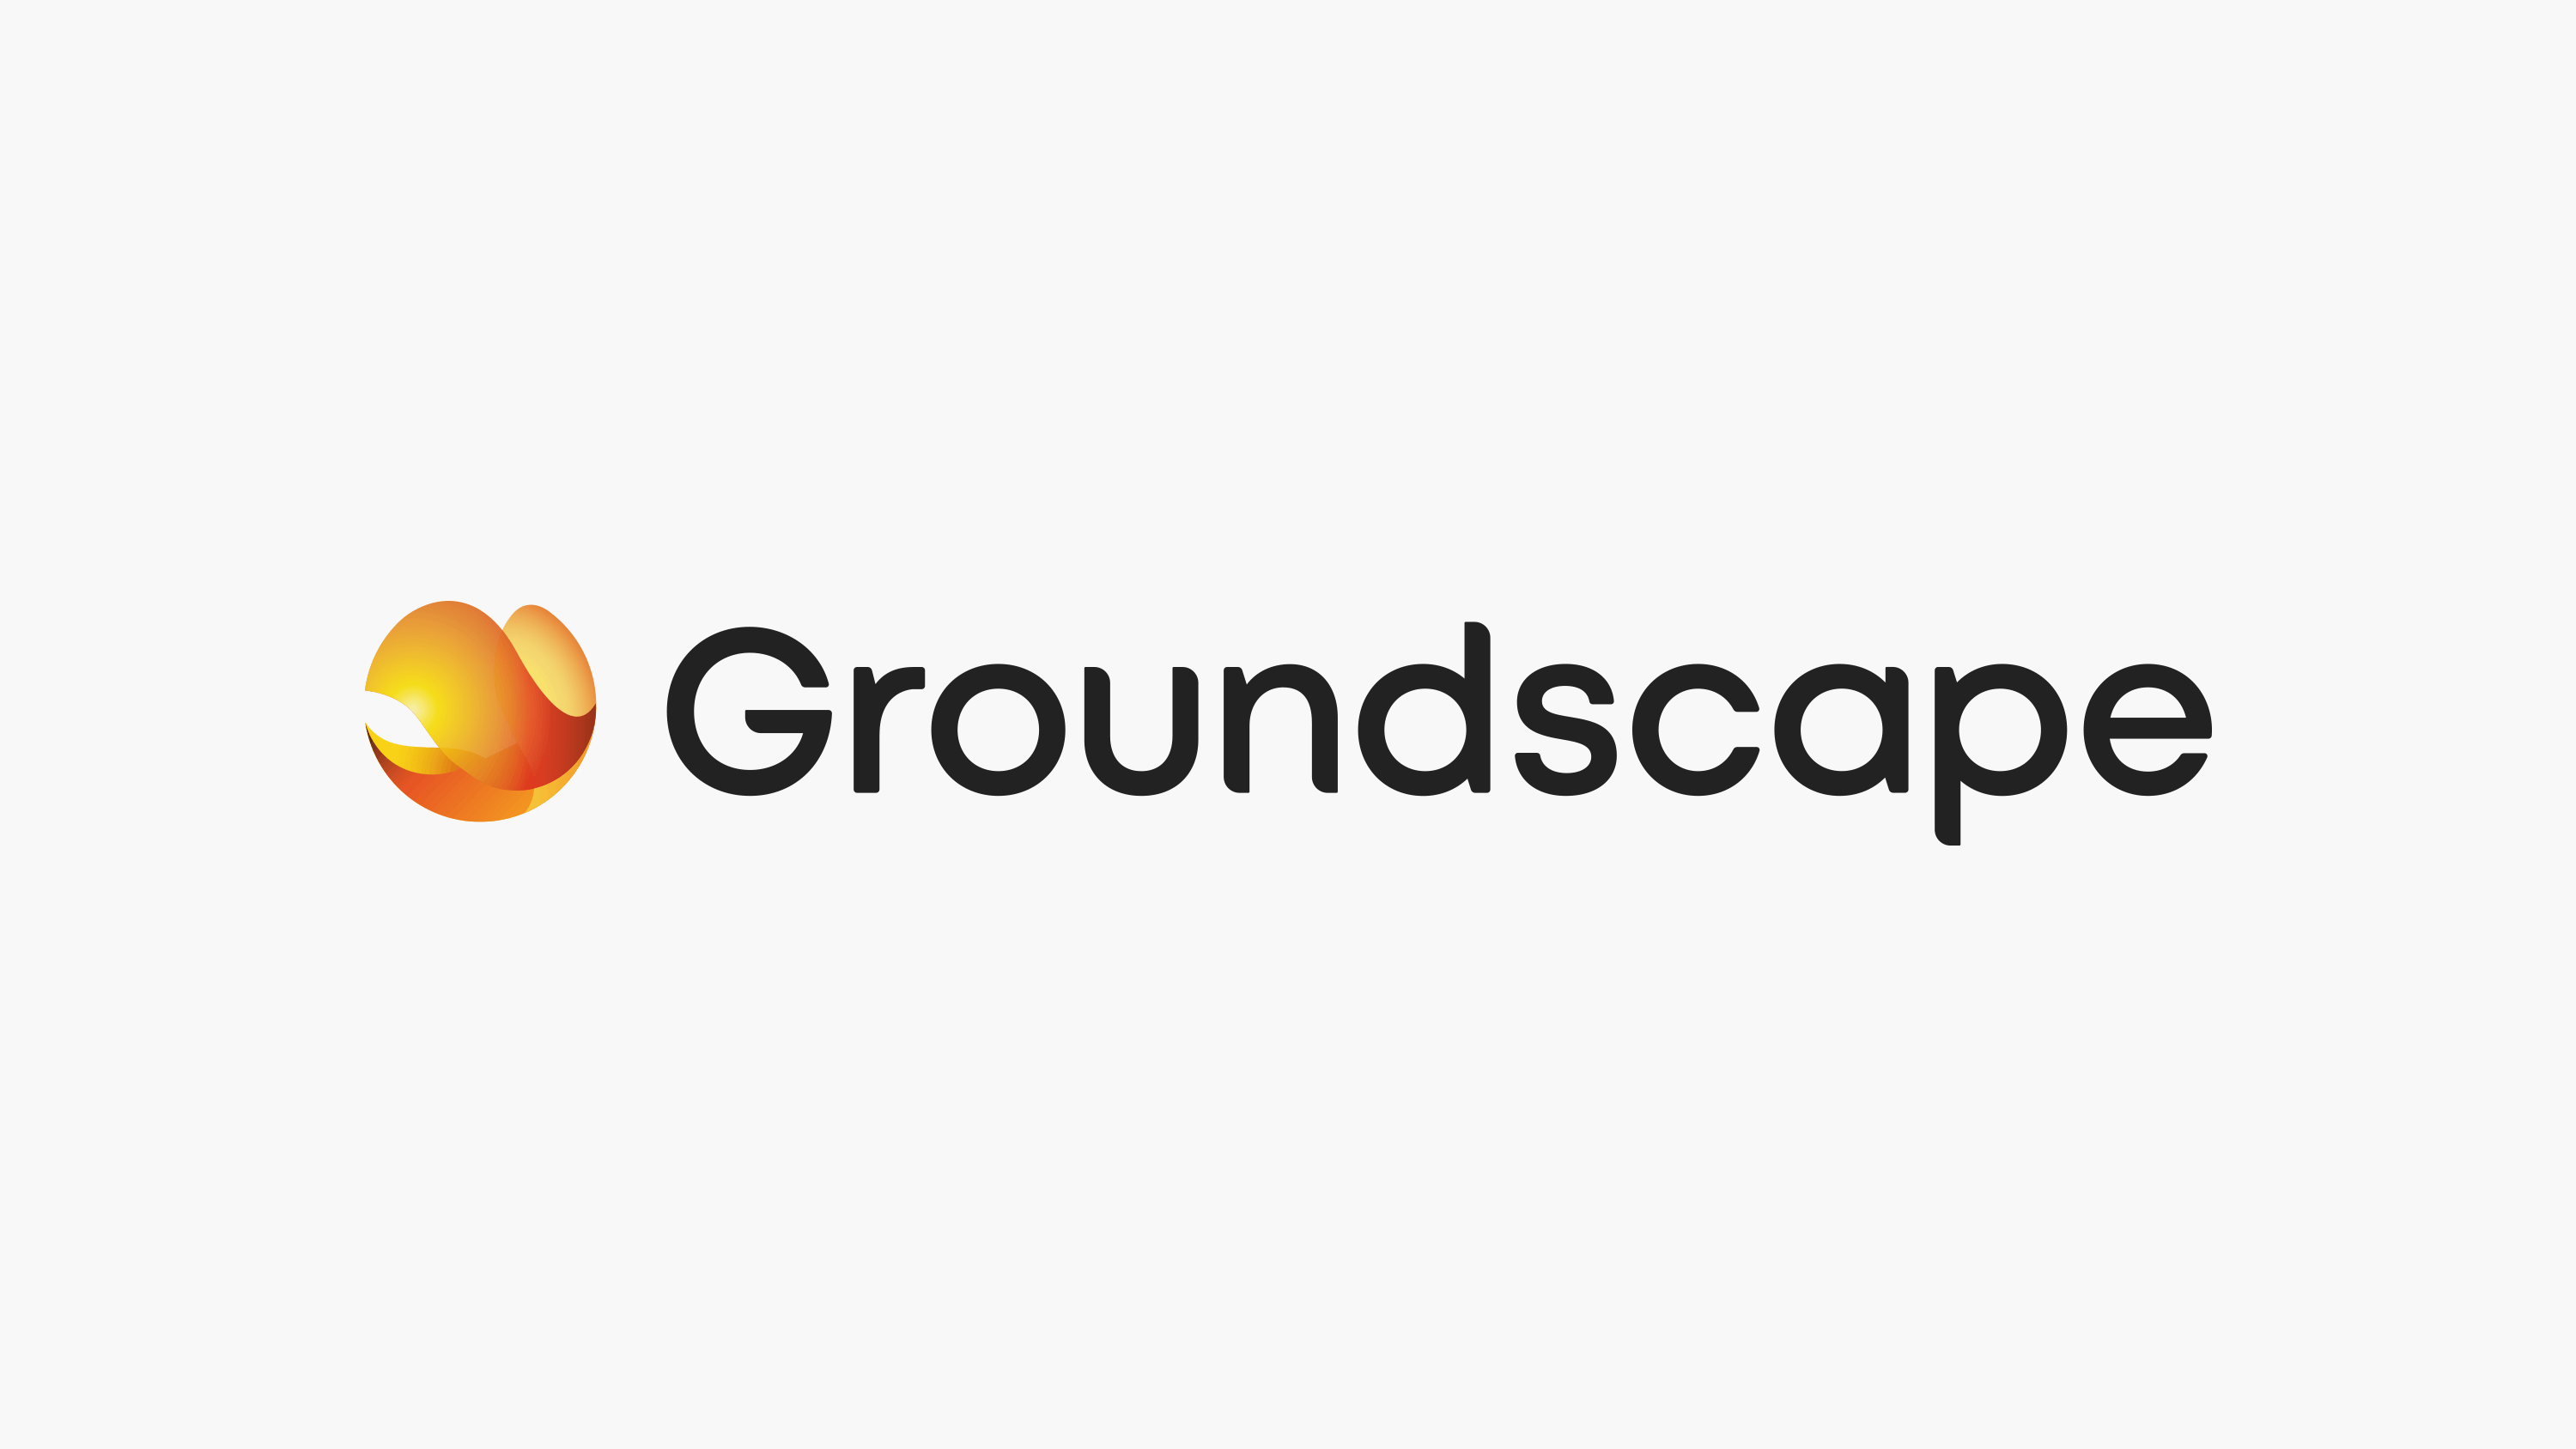 Scotscape Groundscape logo